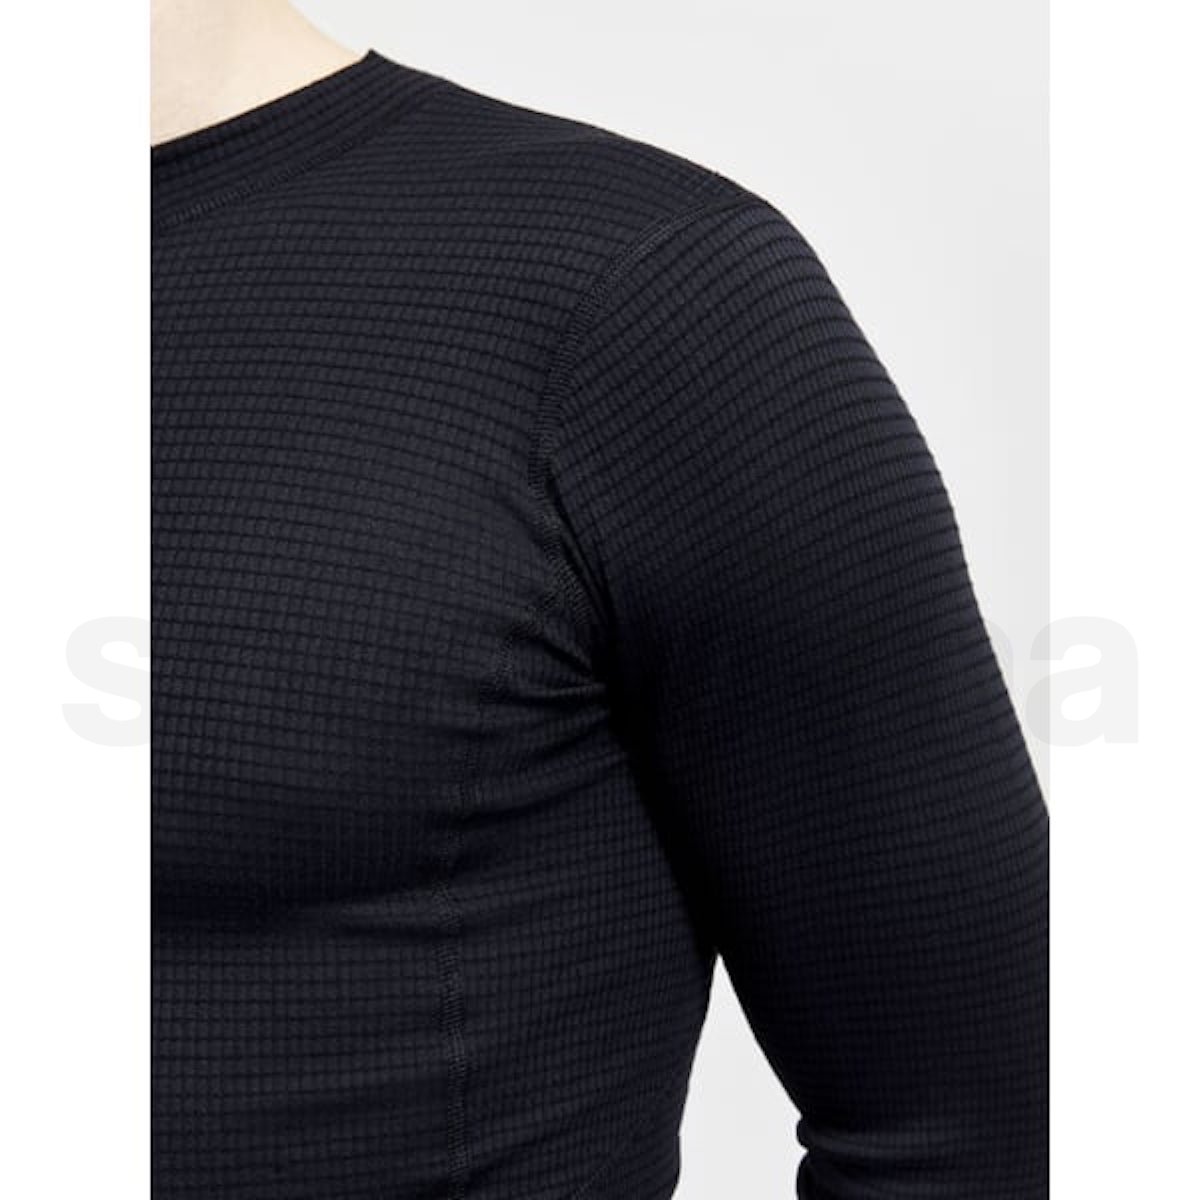 Tričko Craft PRO Wool Extreme X LS M - černá